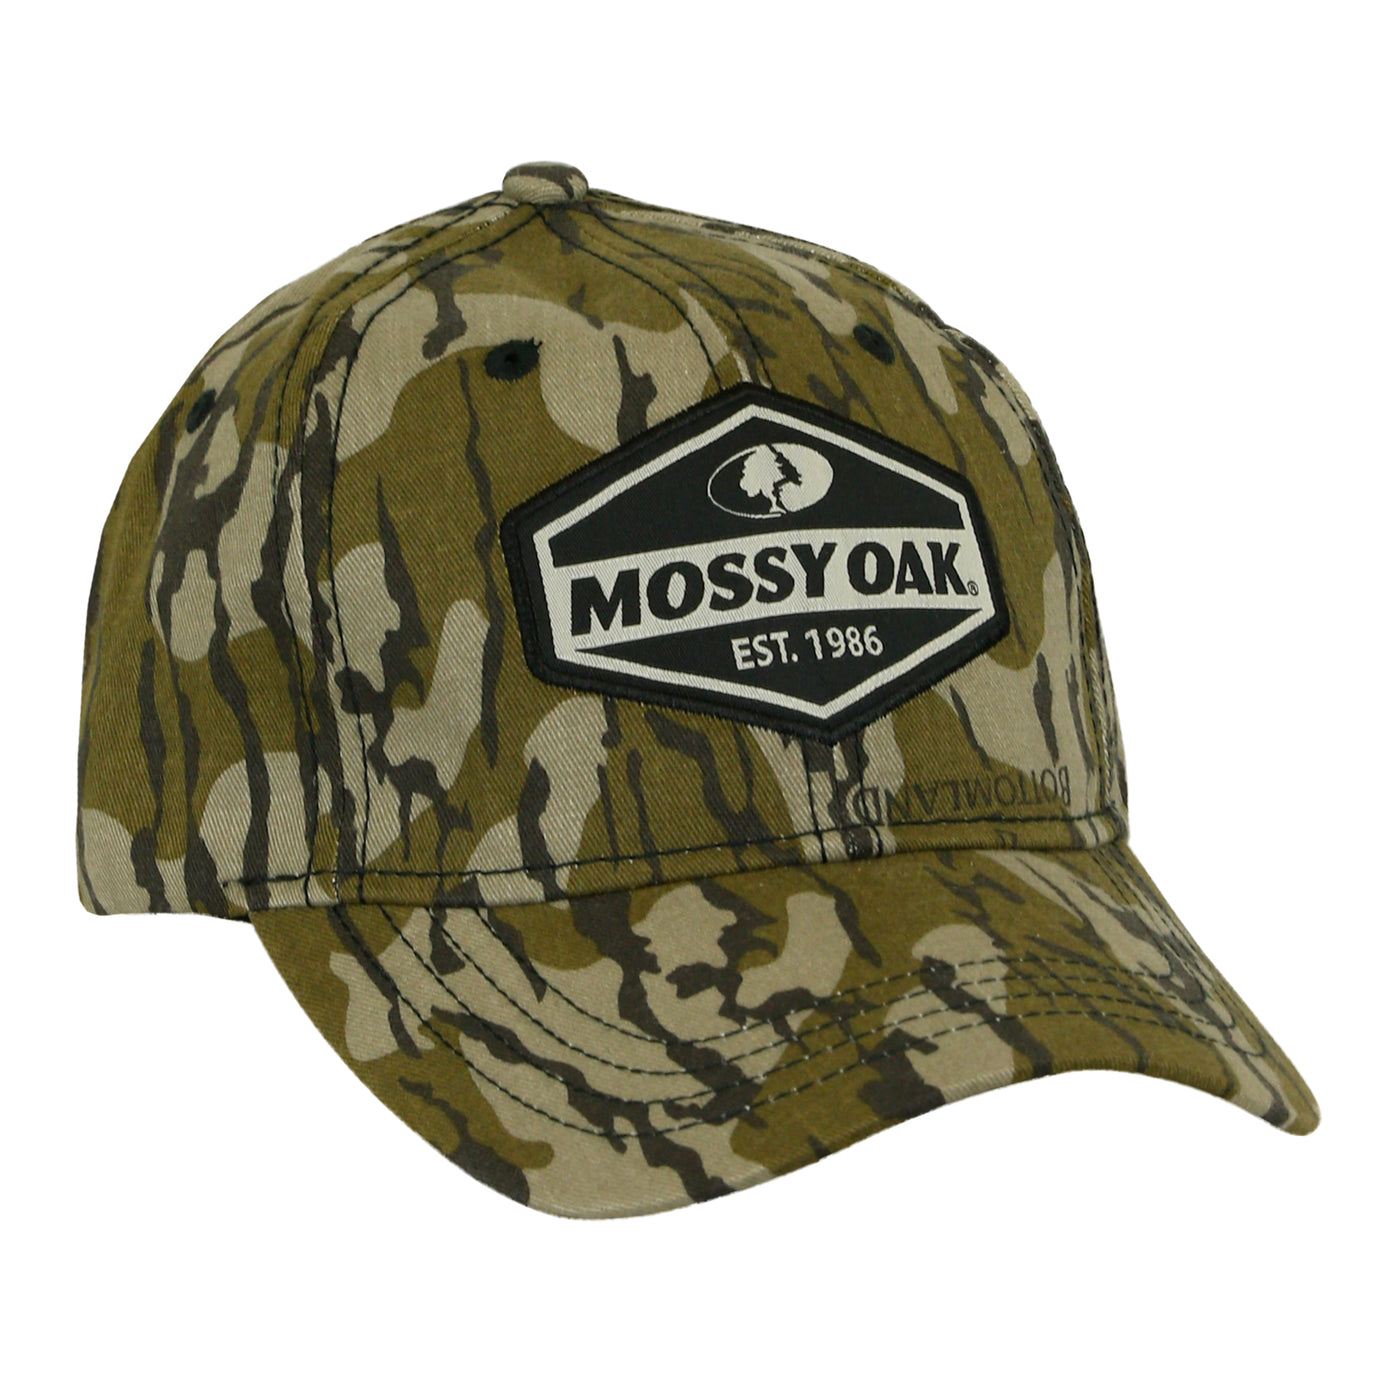 Mossy Oak Diamond Patch Cap